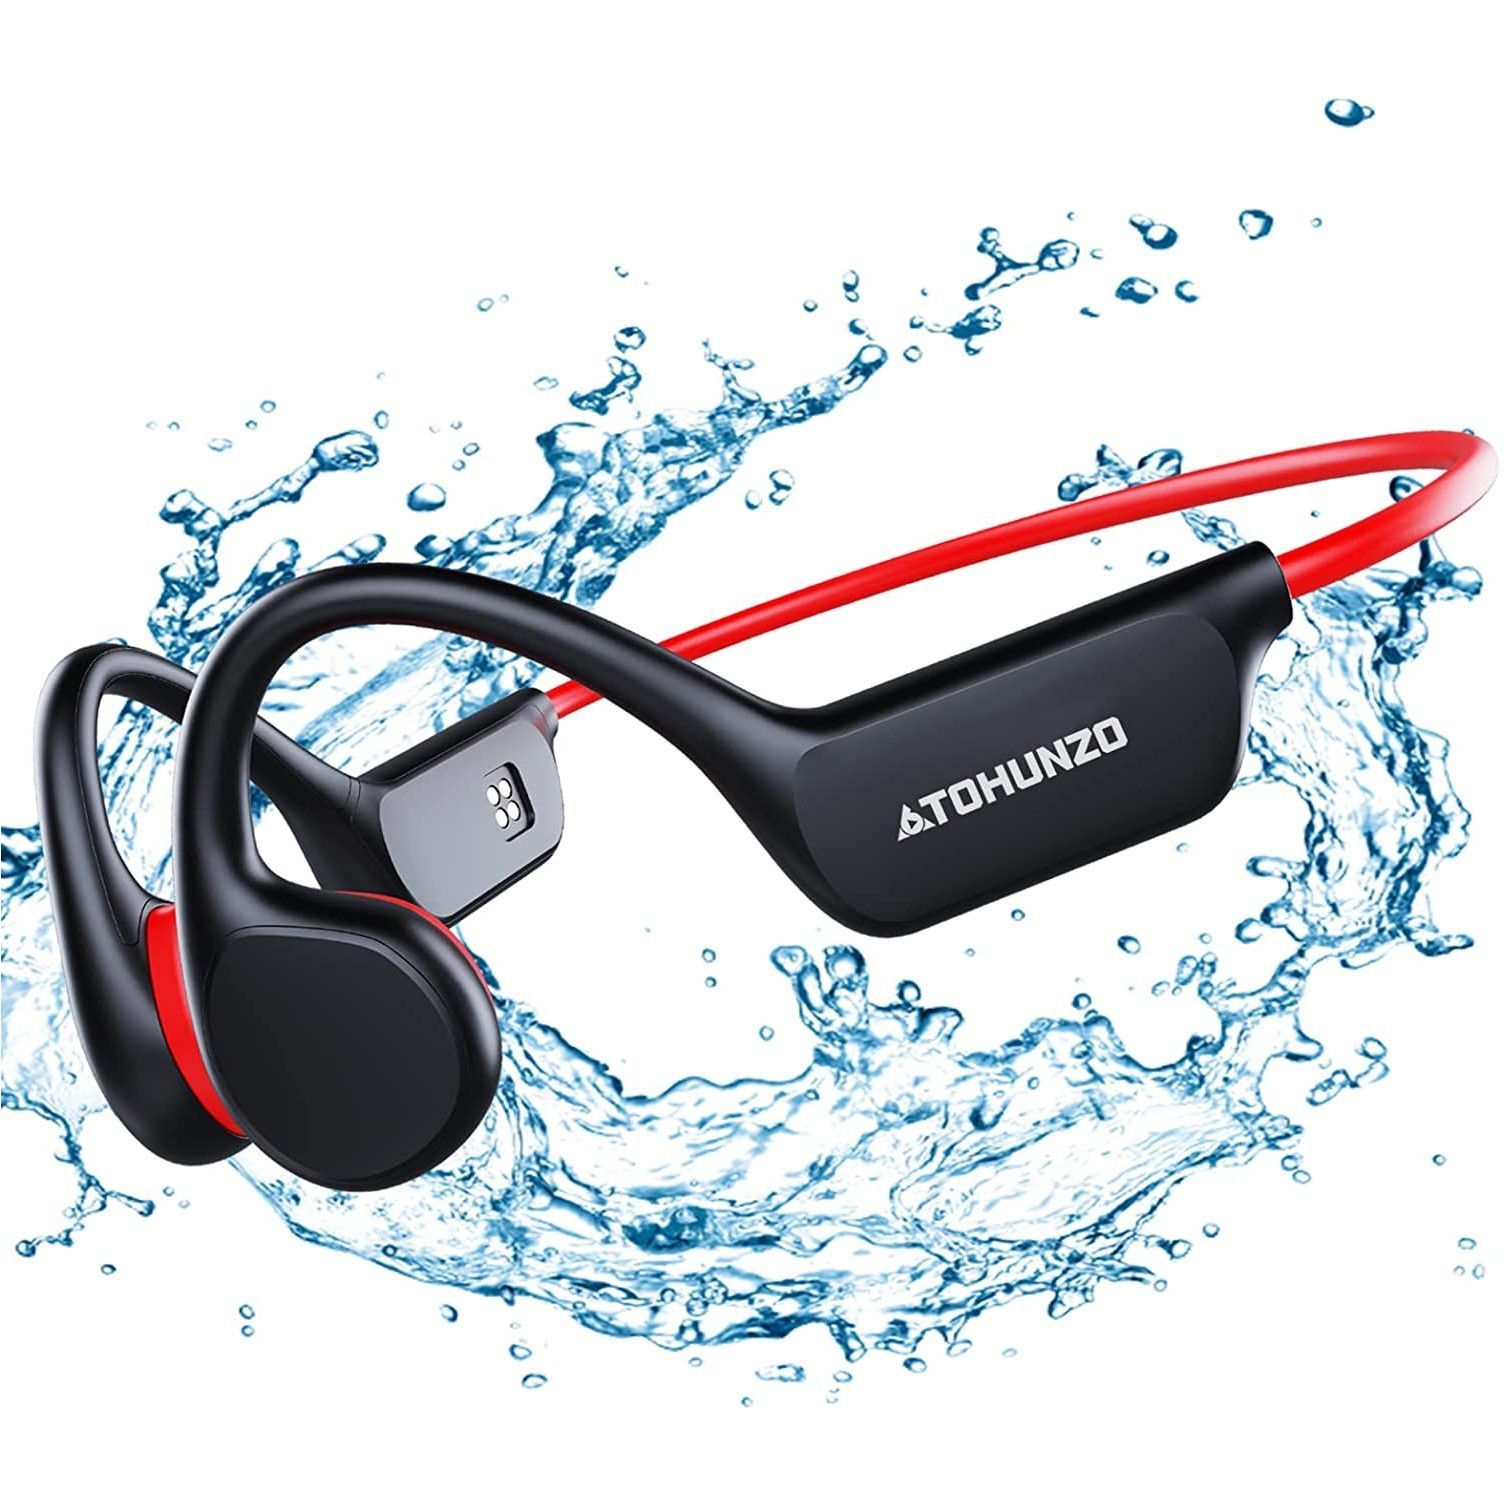 Tohunzo waterproof bone conduction headphones for swimming